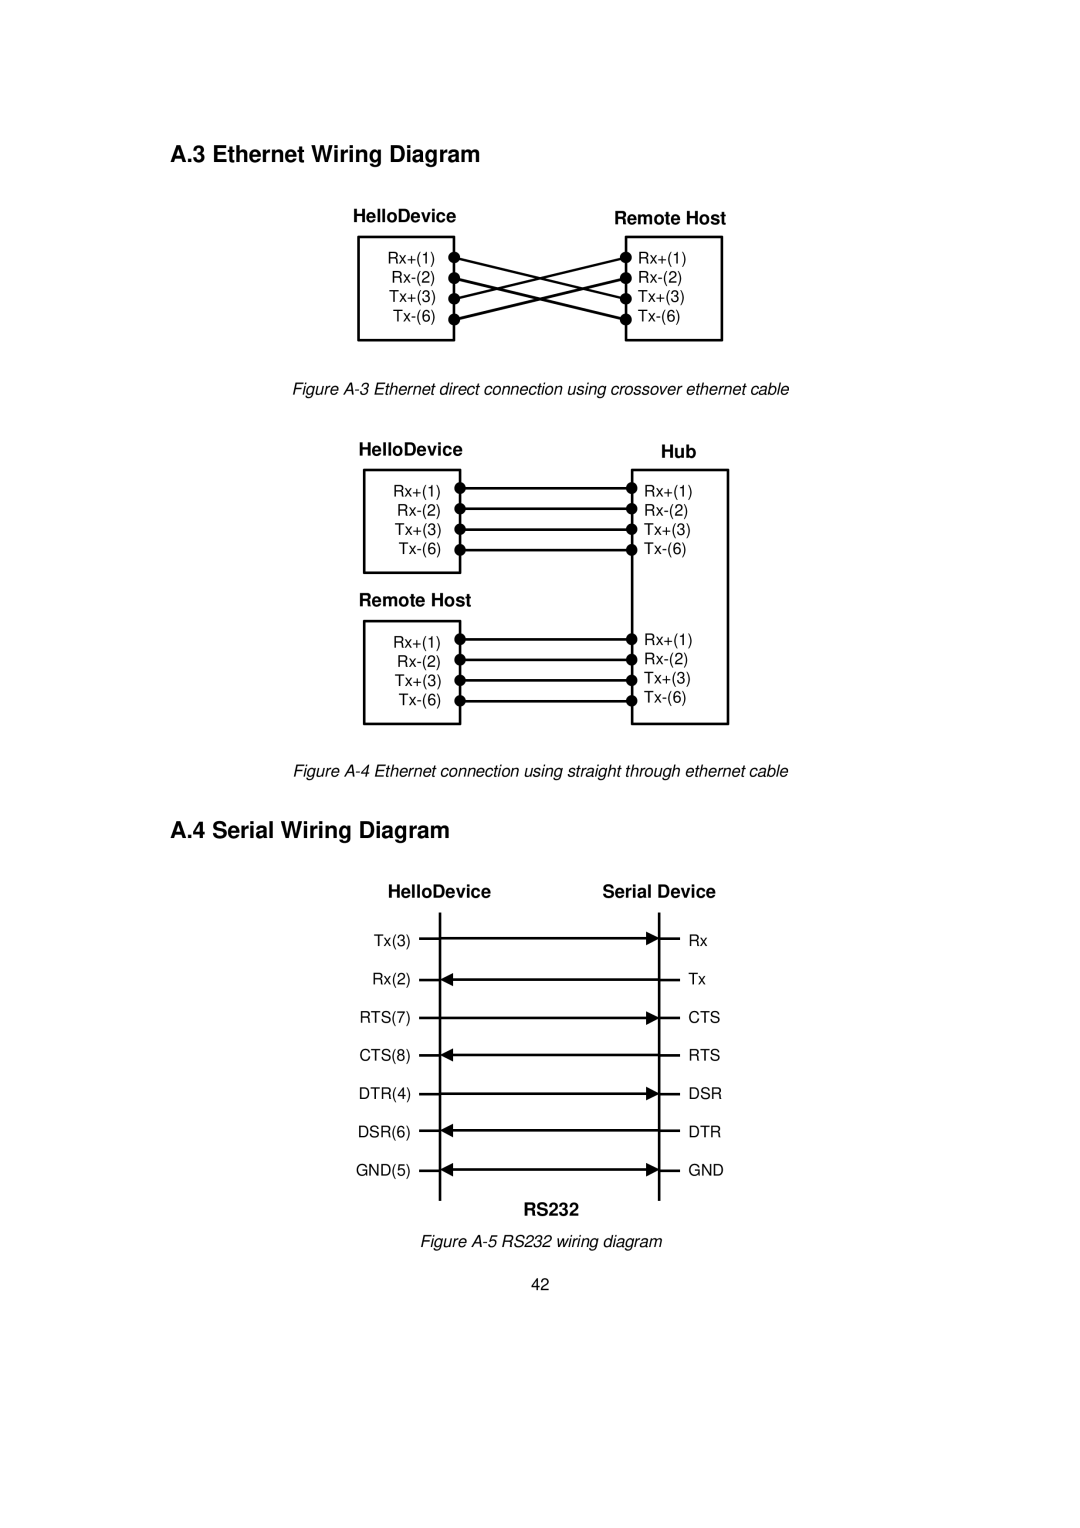 Senatek LS100 manual Ethernet Wiring Diagram, Serial Wiring Diagram, HelloDevice 